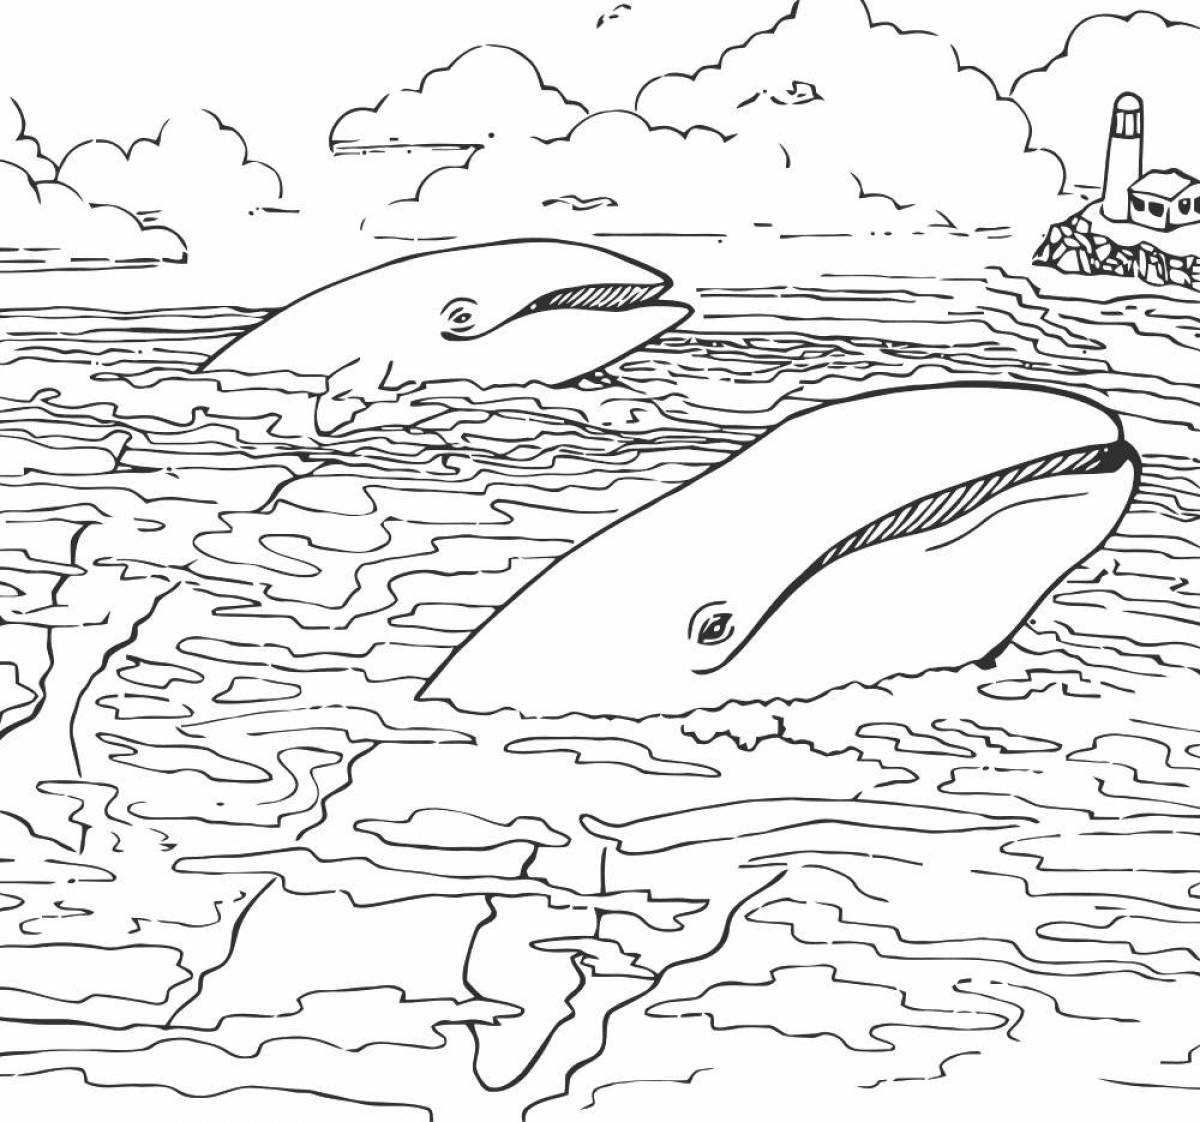 Whales in the ocean